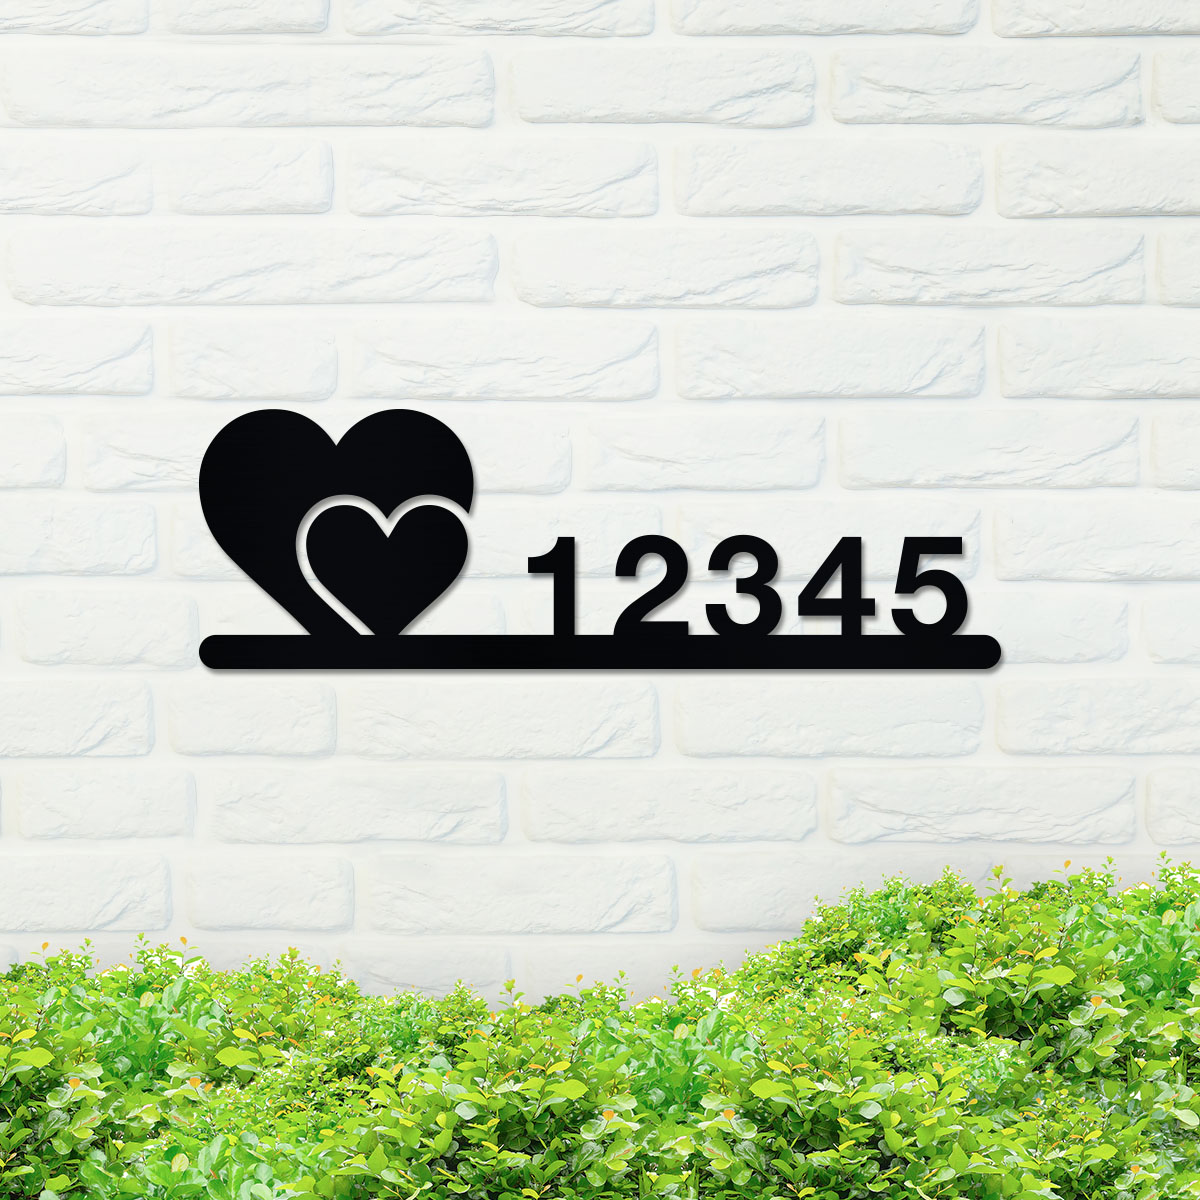 Hearts house num – White brick wall